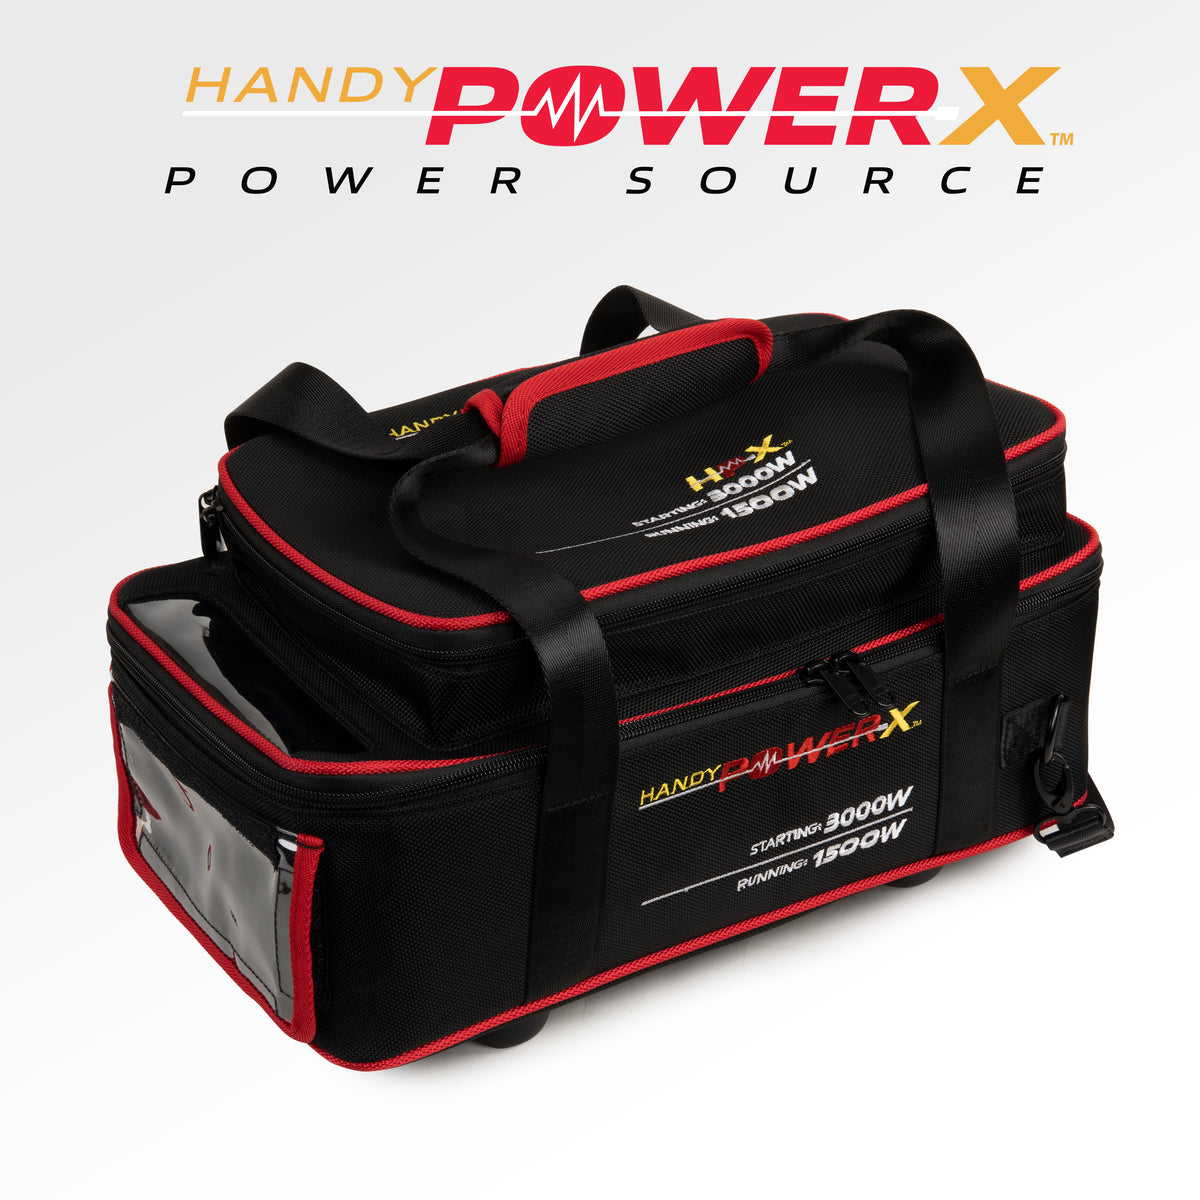 handypowerx.com